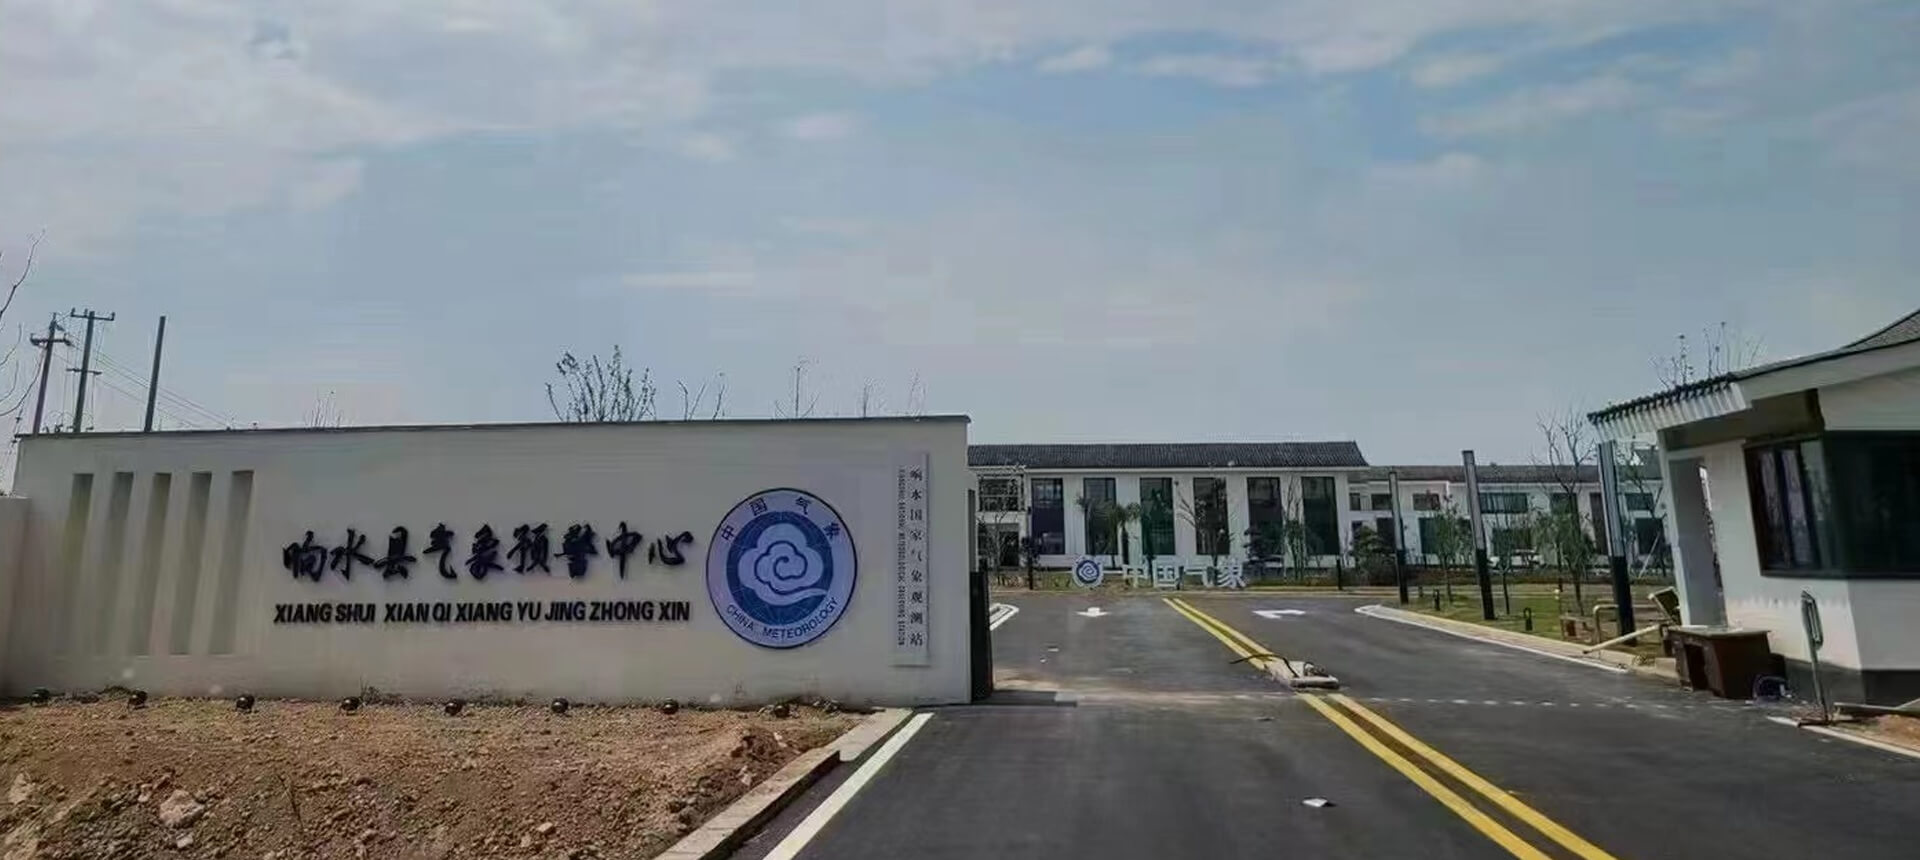 Sistem persidangan tanpa kertas untuk meteorologi China di Jiangsu